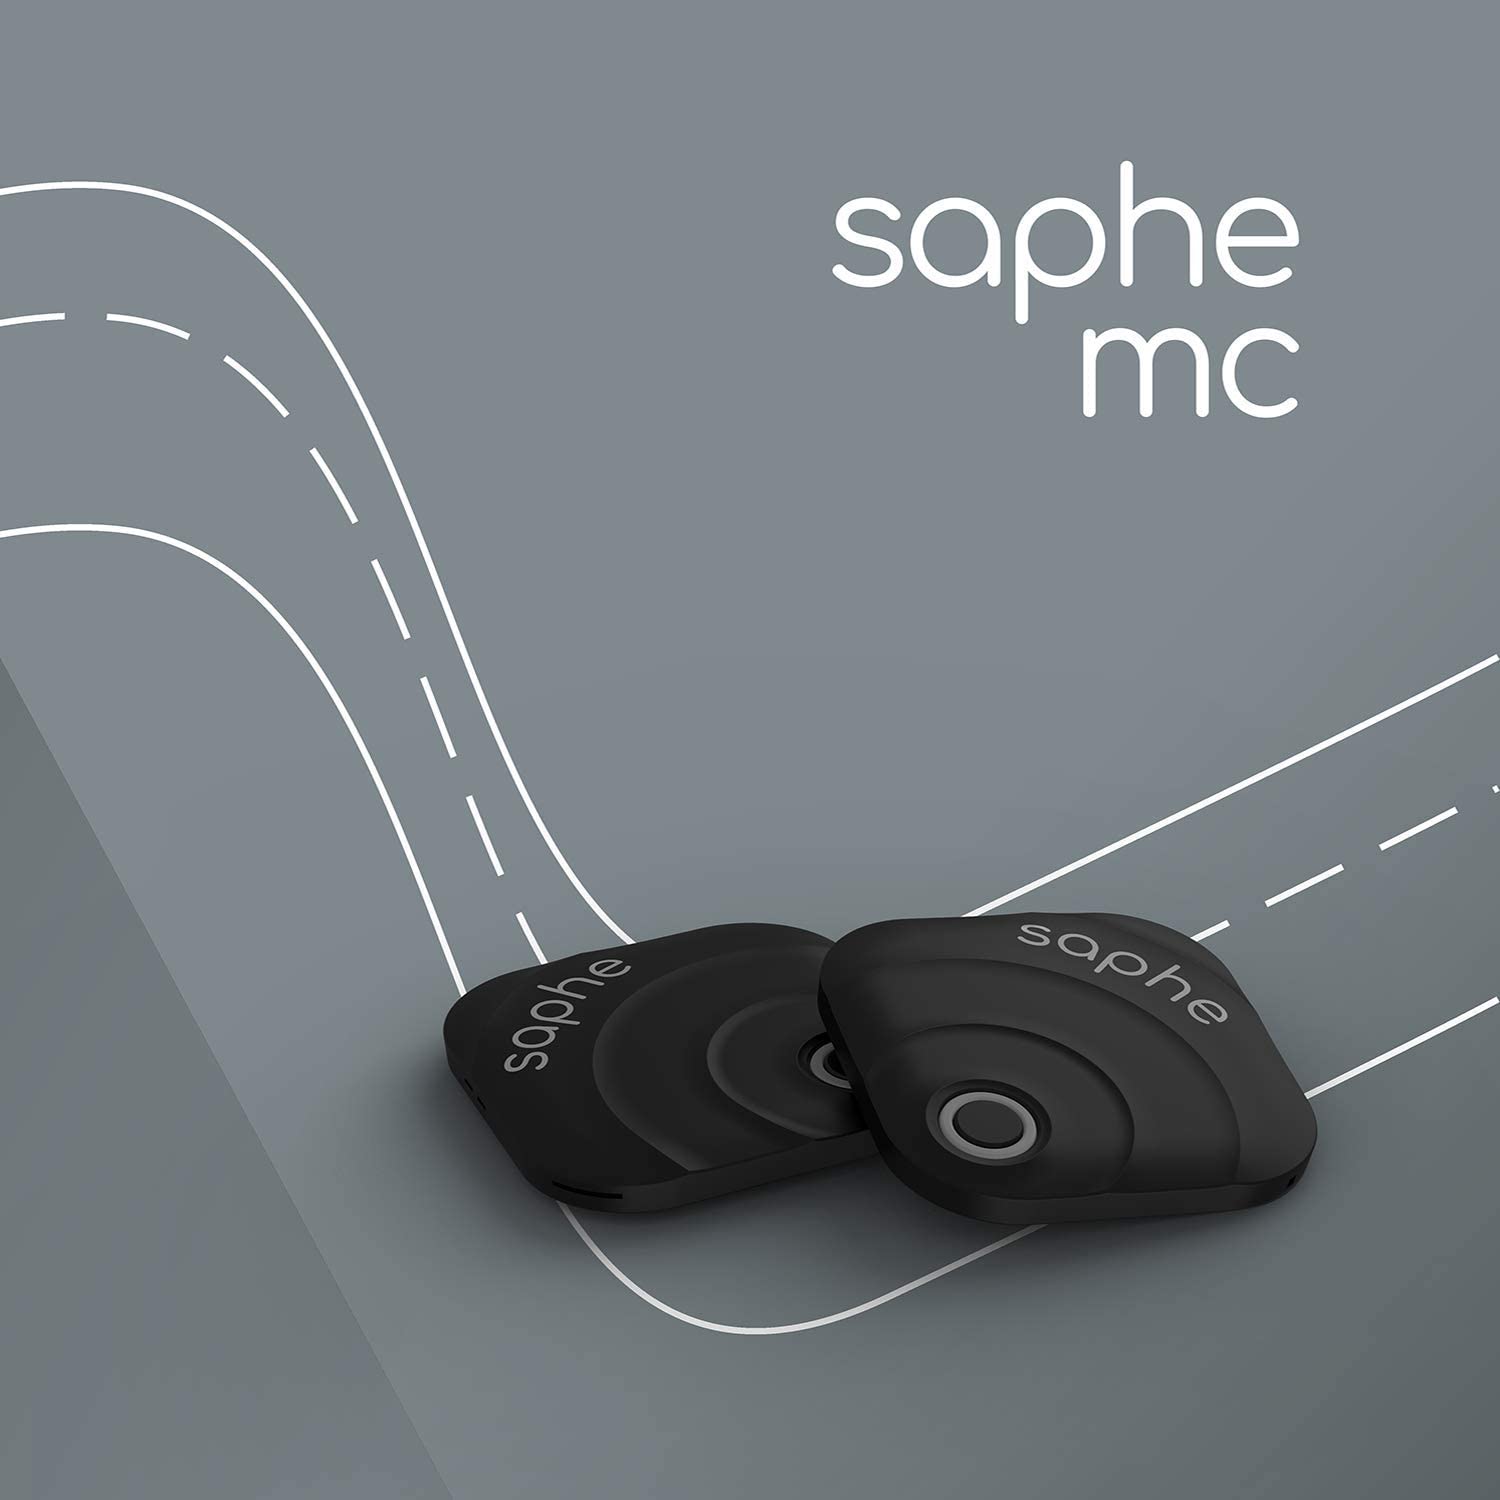 Saphe One+ segnalatore autovelox - Saphe - IT